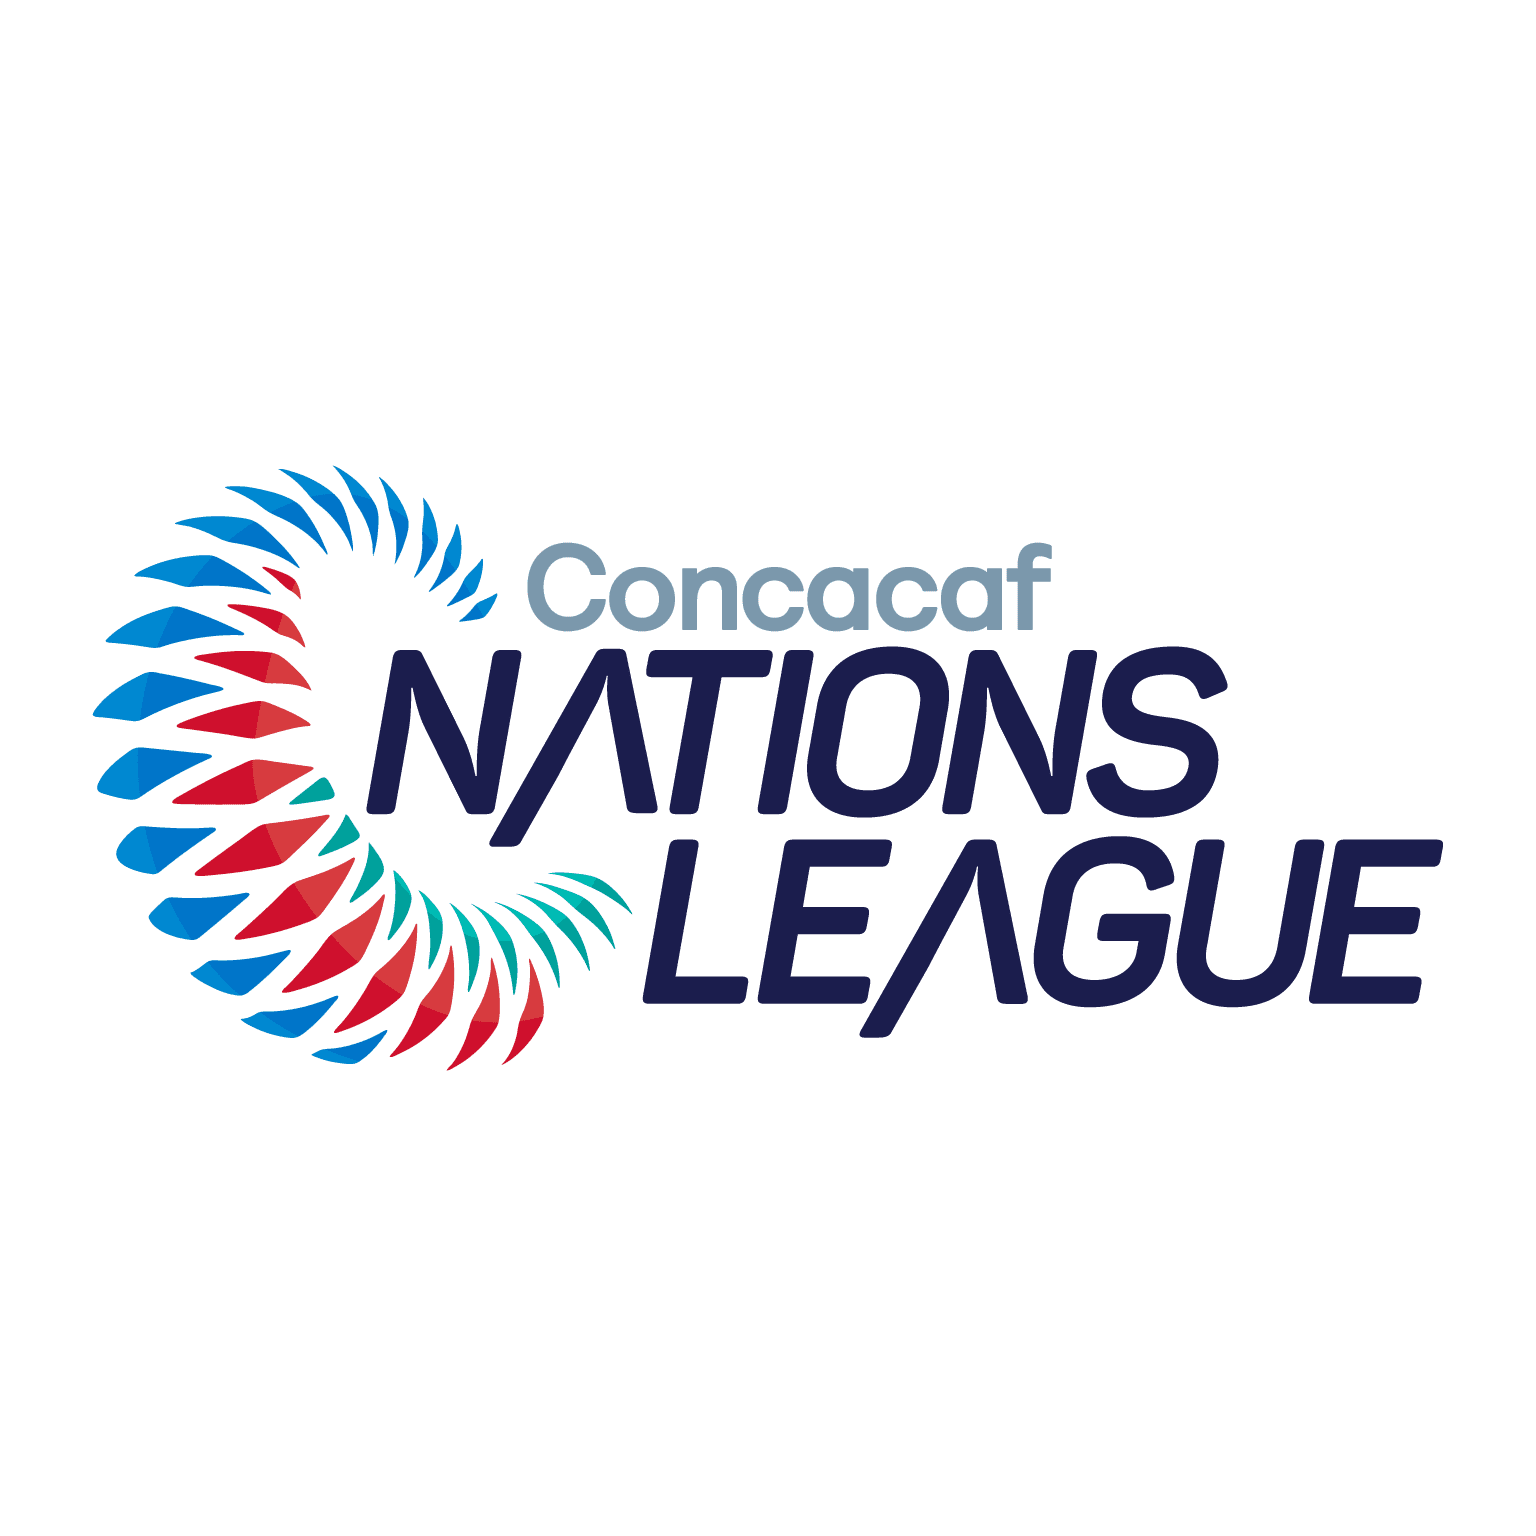 marca concacaf national league